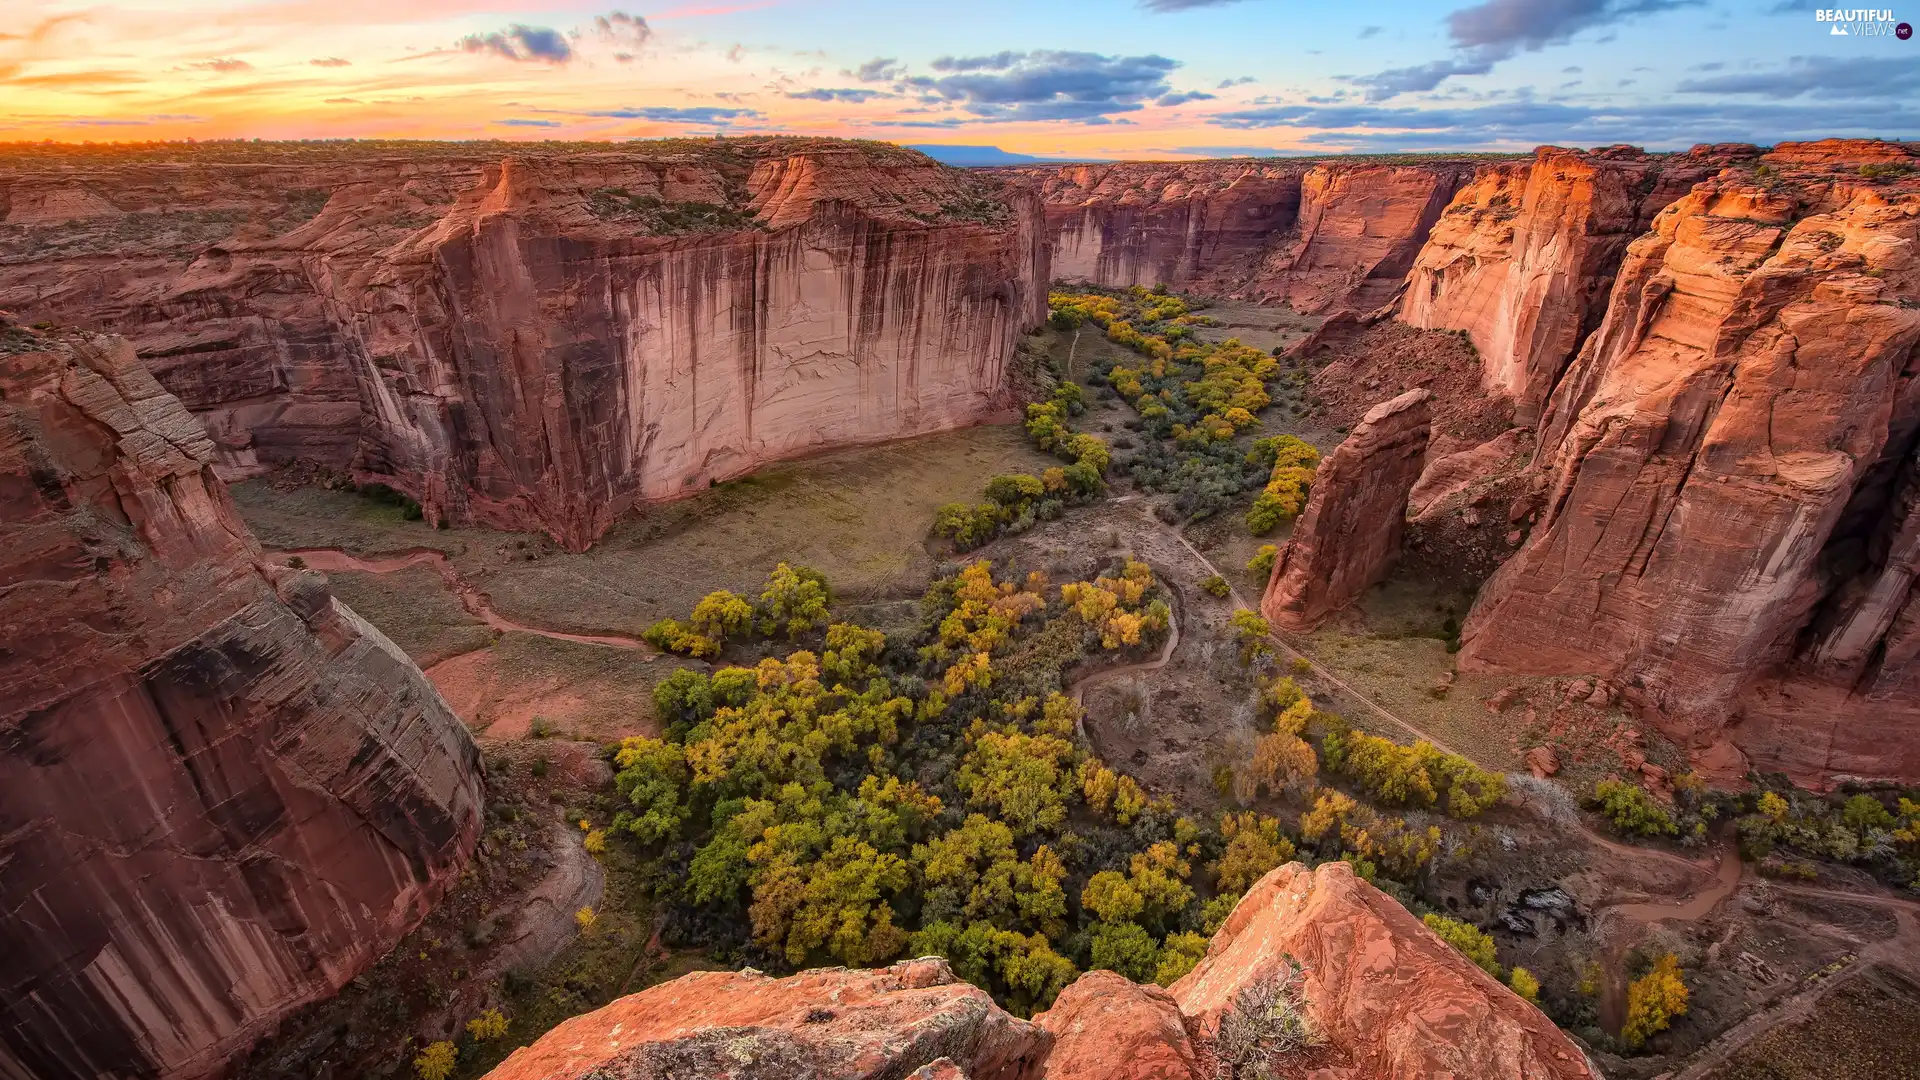 The United States, Canyon De Chelly, National Park of Arizona, Arizona